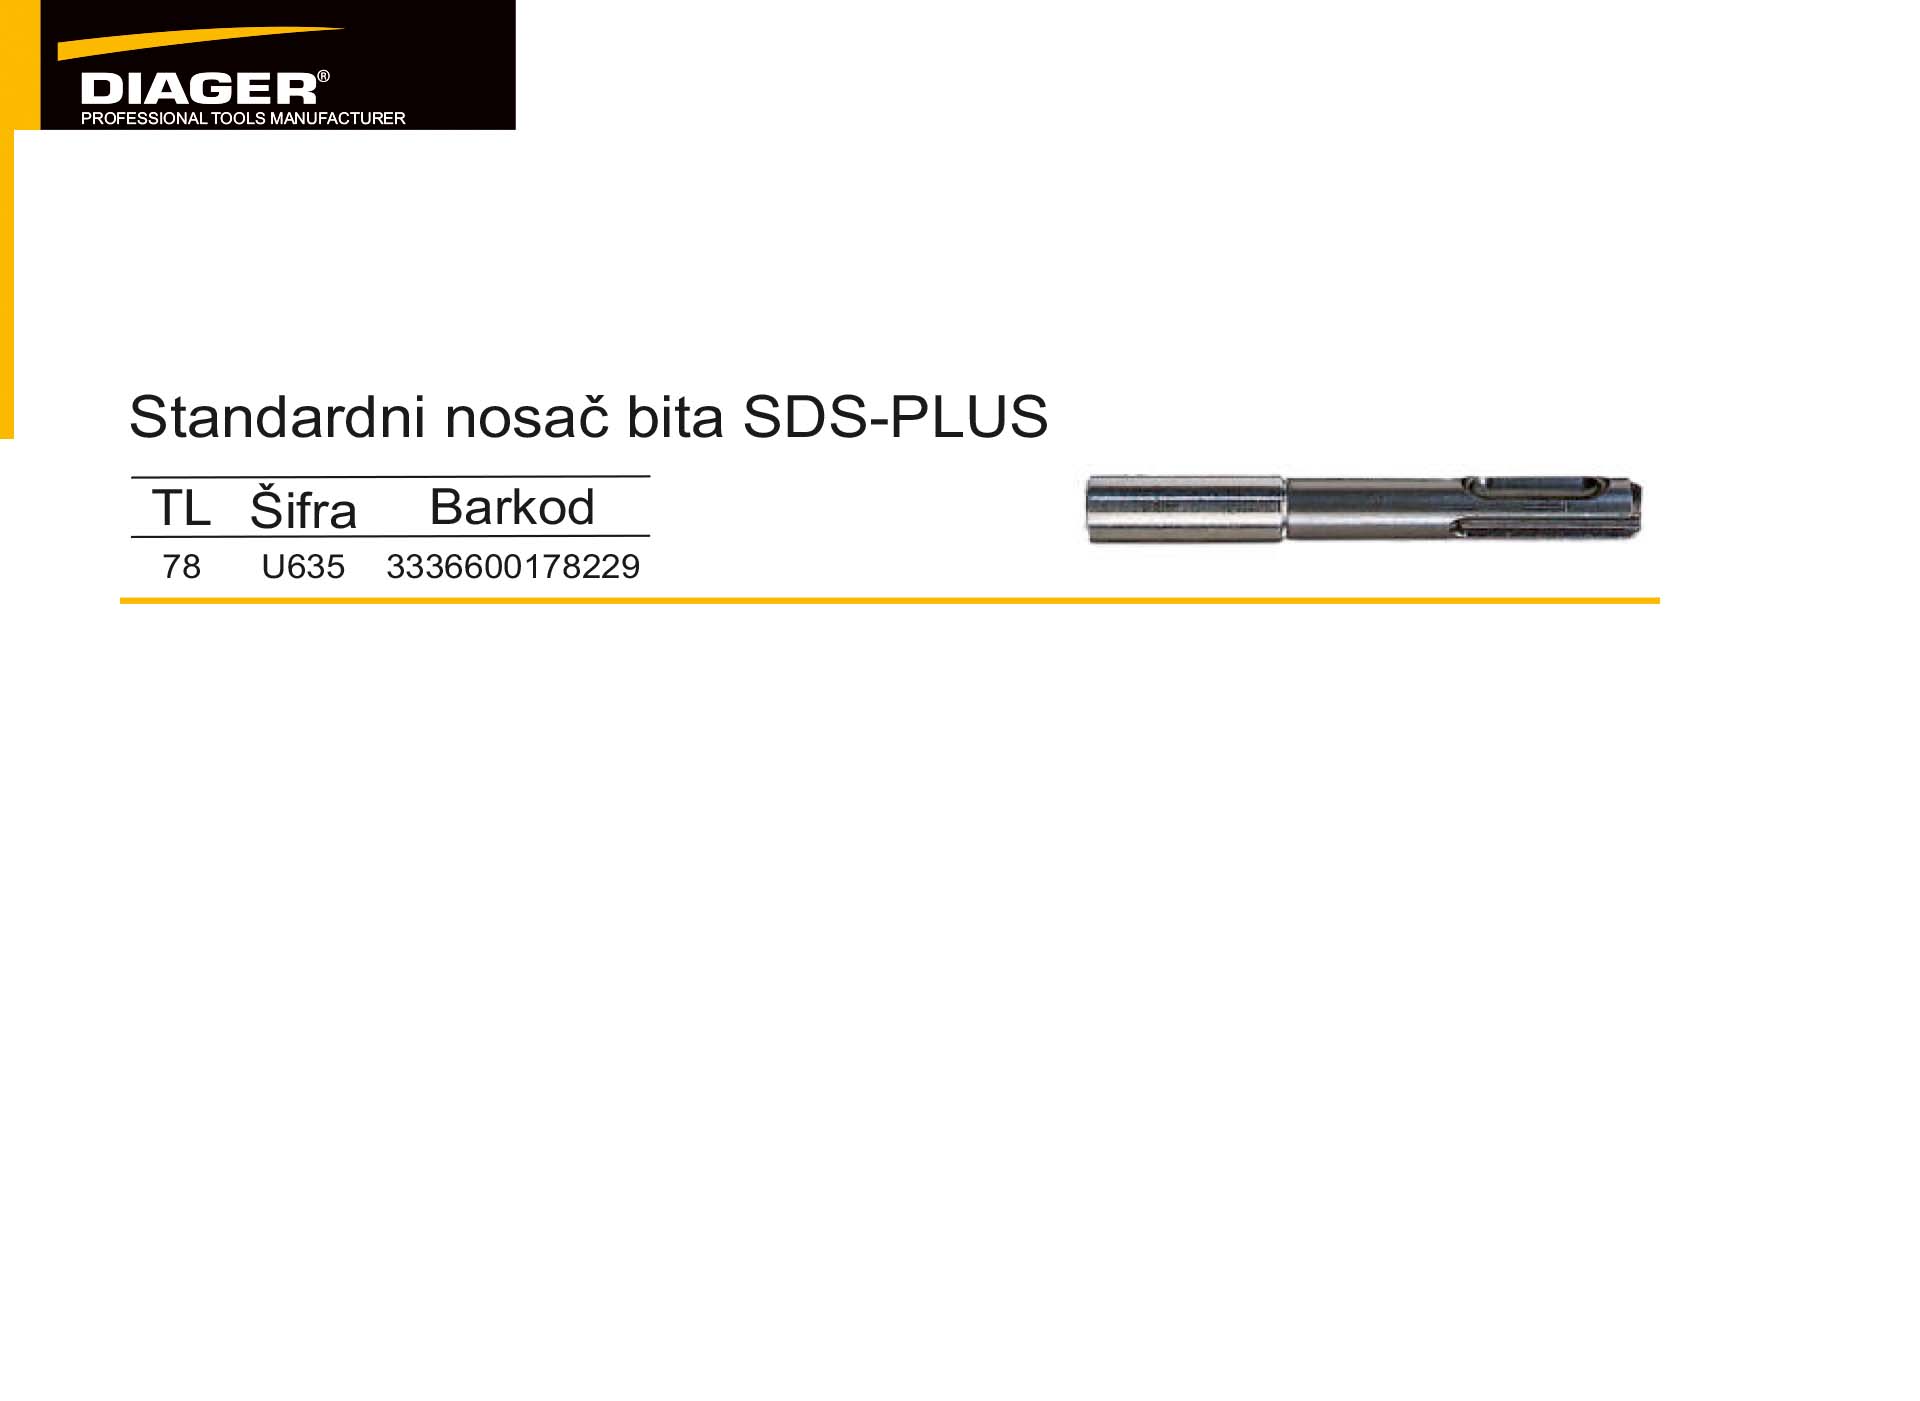 Standardni nosač bita SDS-PLUS